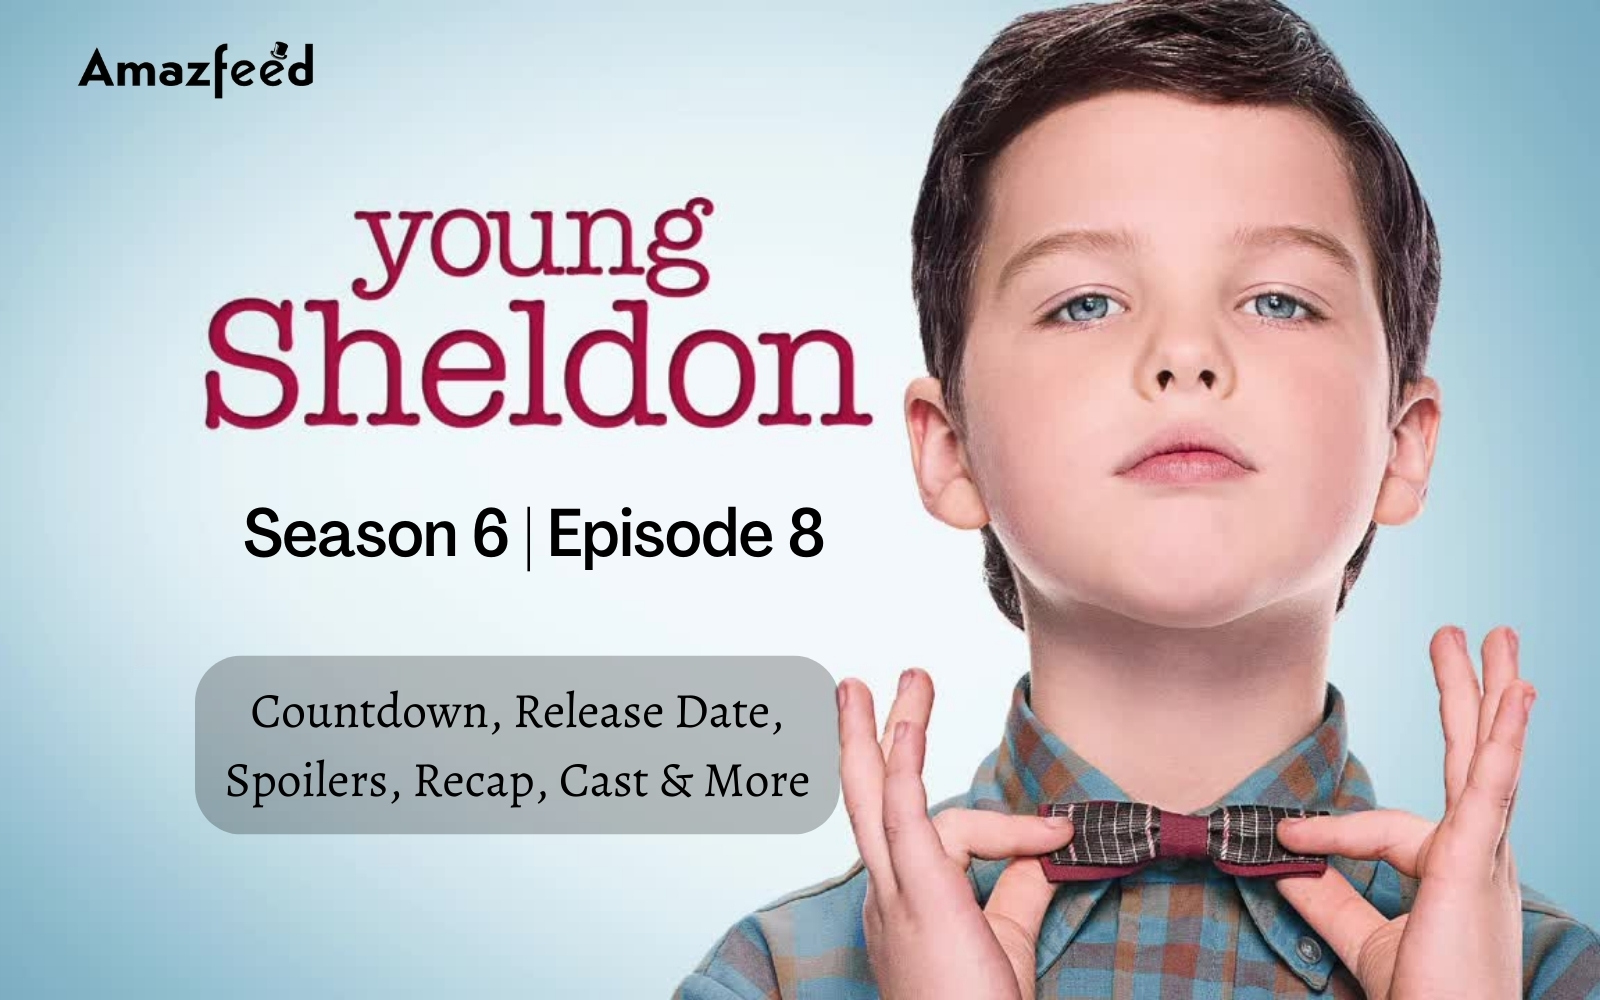 Young Sheldon Season 6 Episode 8 ⇒ Spoilers, Recap, Countdown, Cast